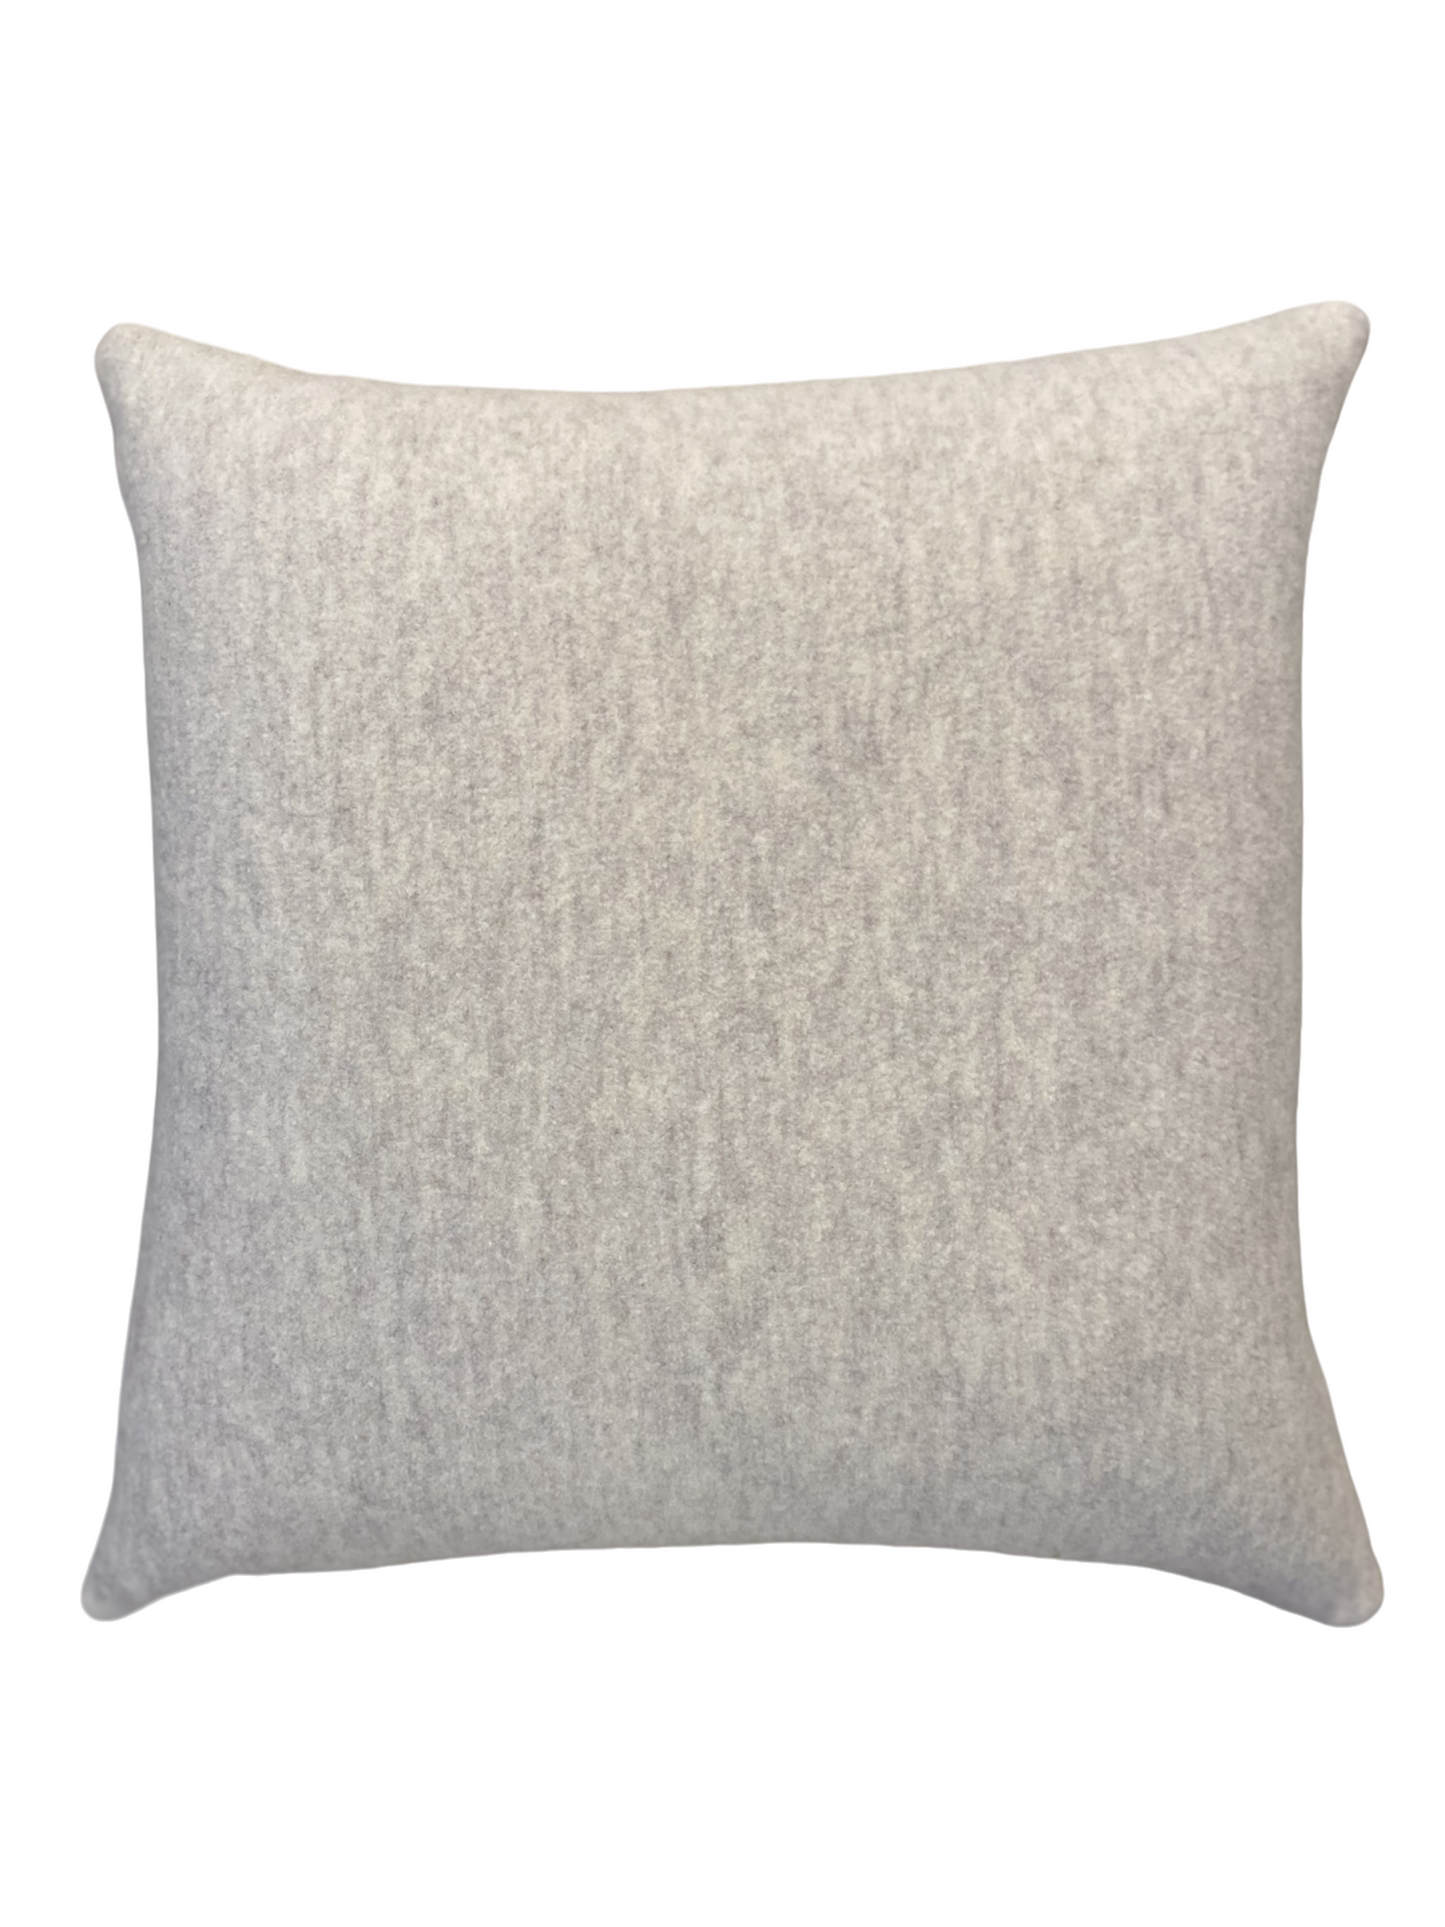 Light Neutral Linen Pillow with Mink Velvet Trim and Middle Accent Trim